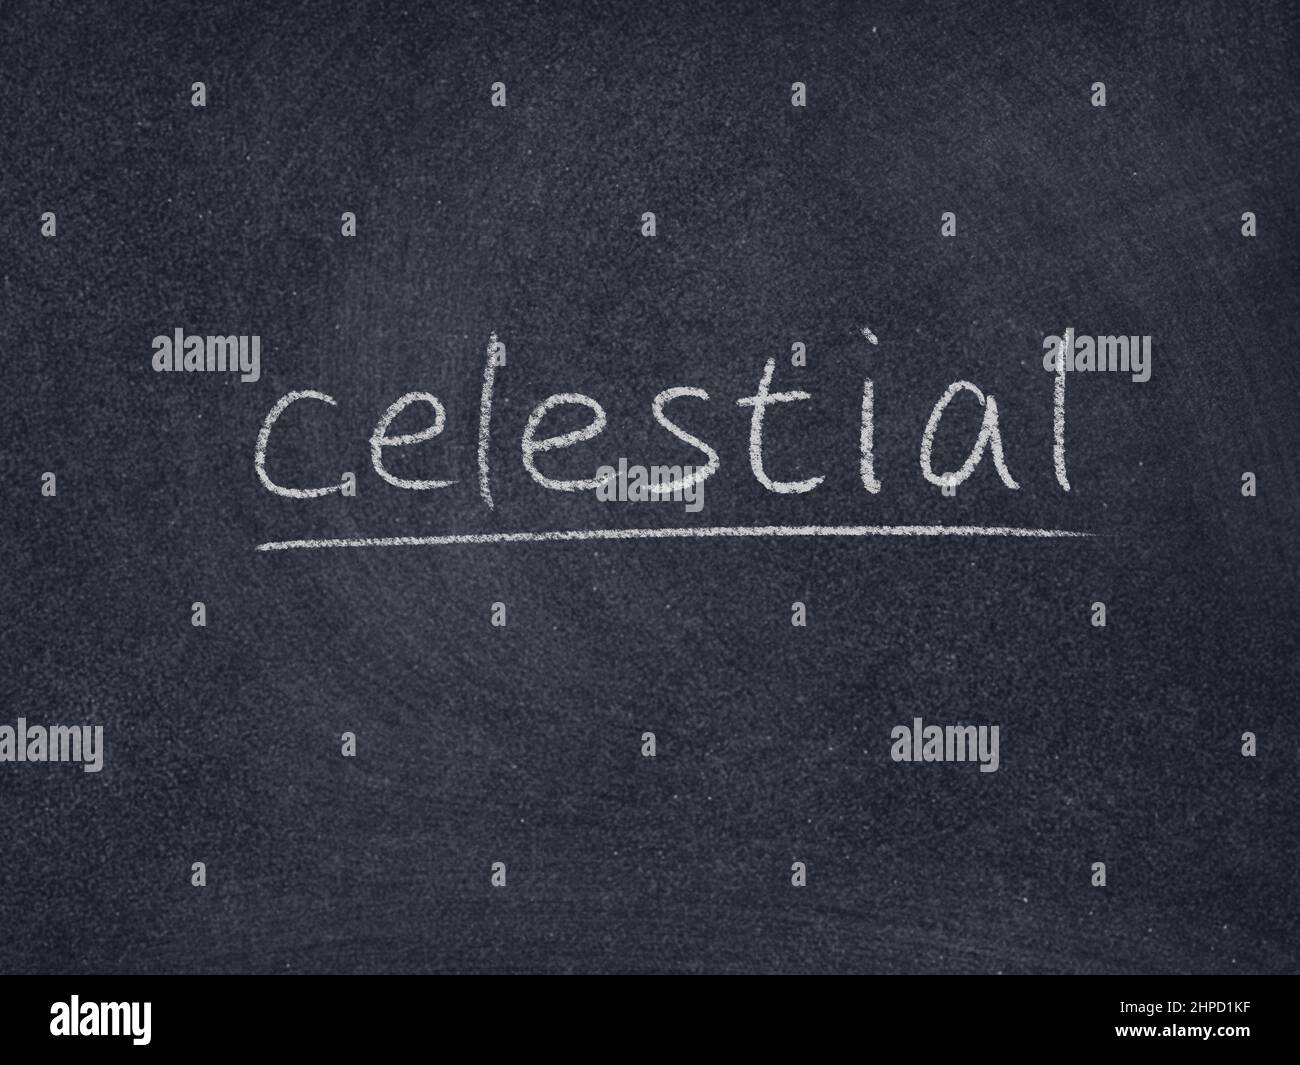 celestial concept word on blackboard background Stock Photo